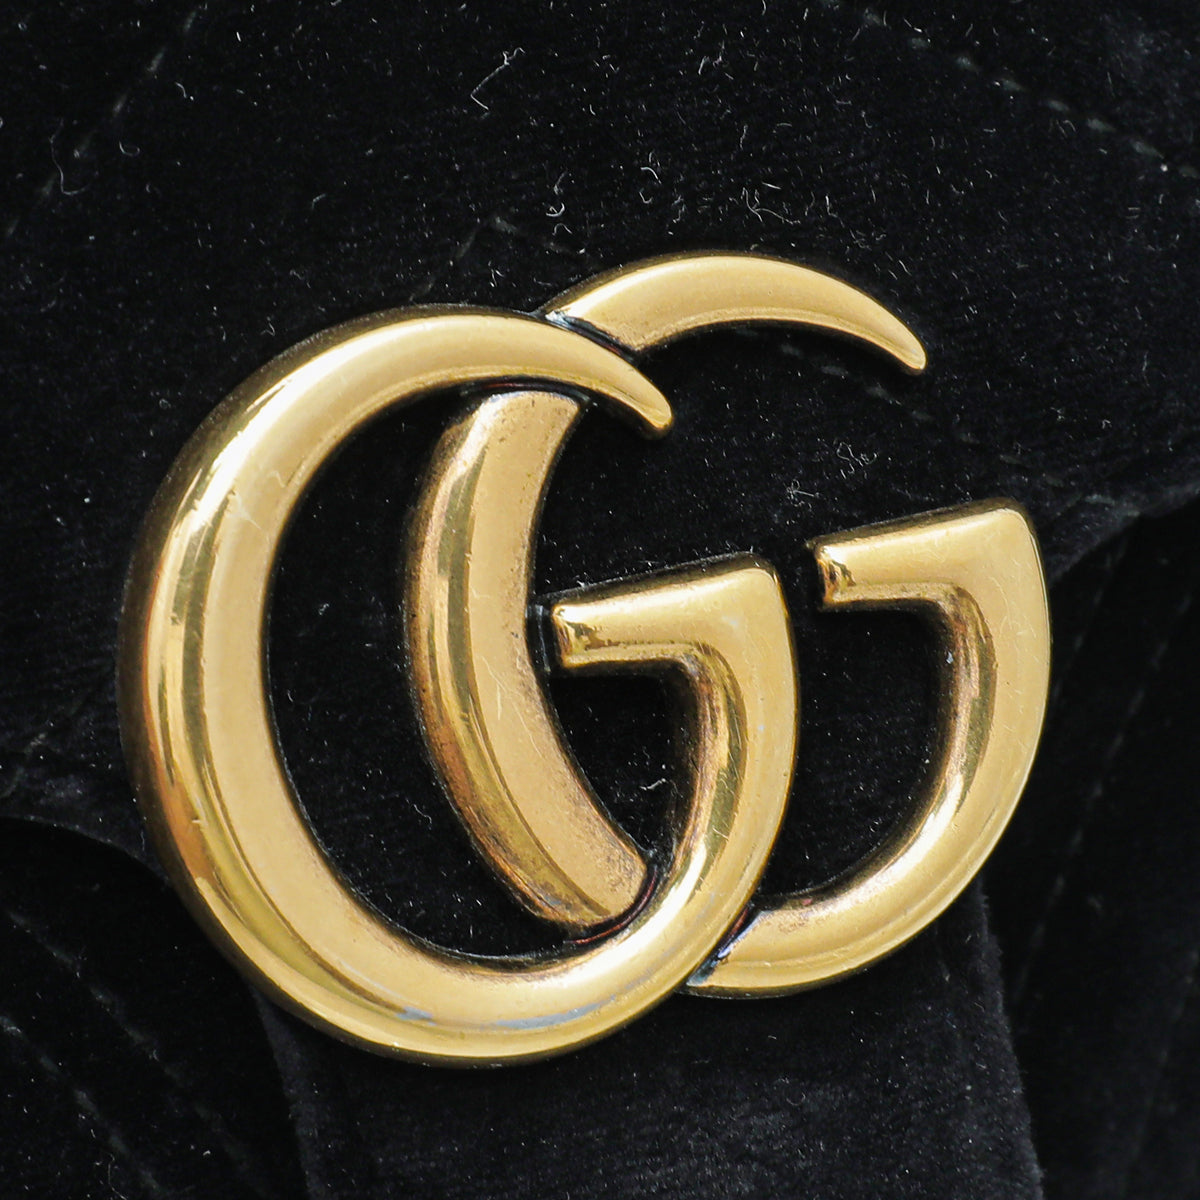 Gucci Black Mini GG Marmont 2.0 Shoulder Bag